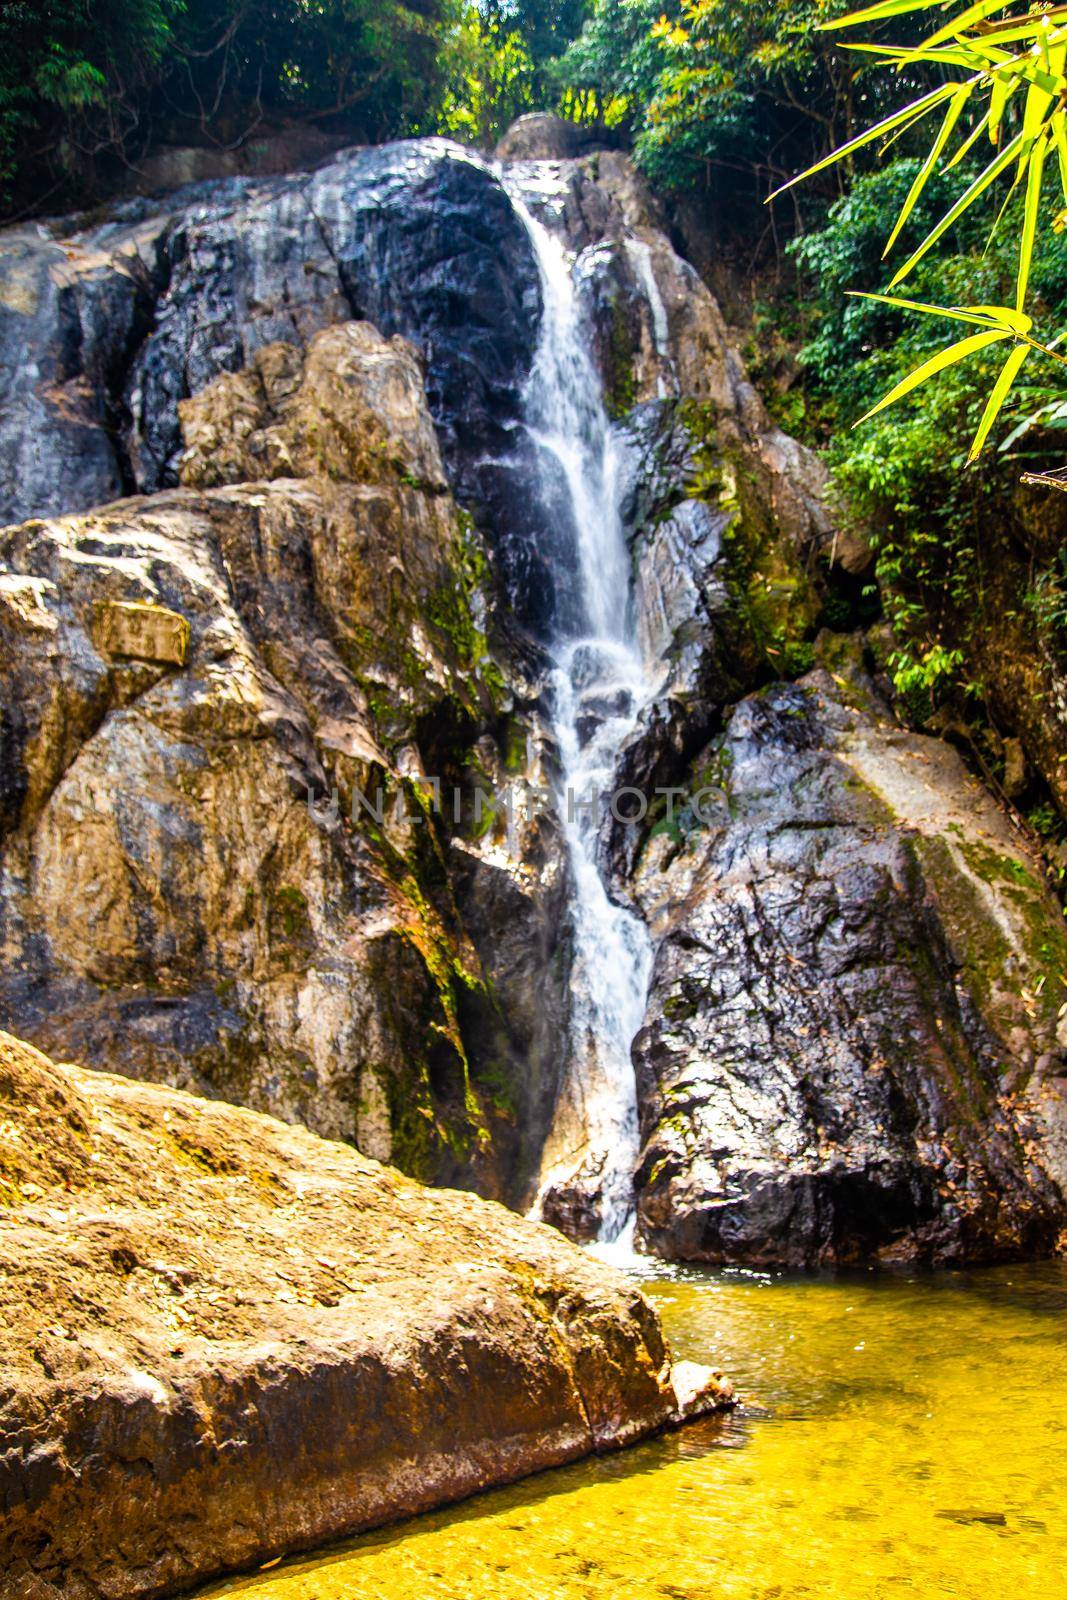 Punyaban waterfall in Ranong, Thailand. High quality photo